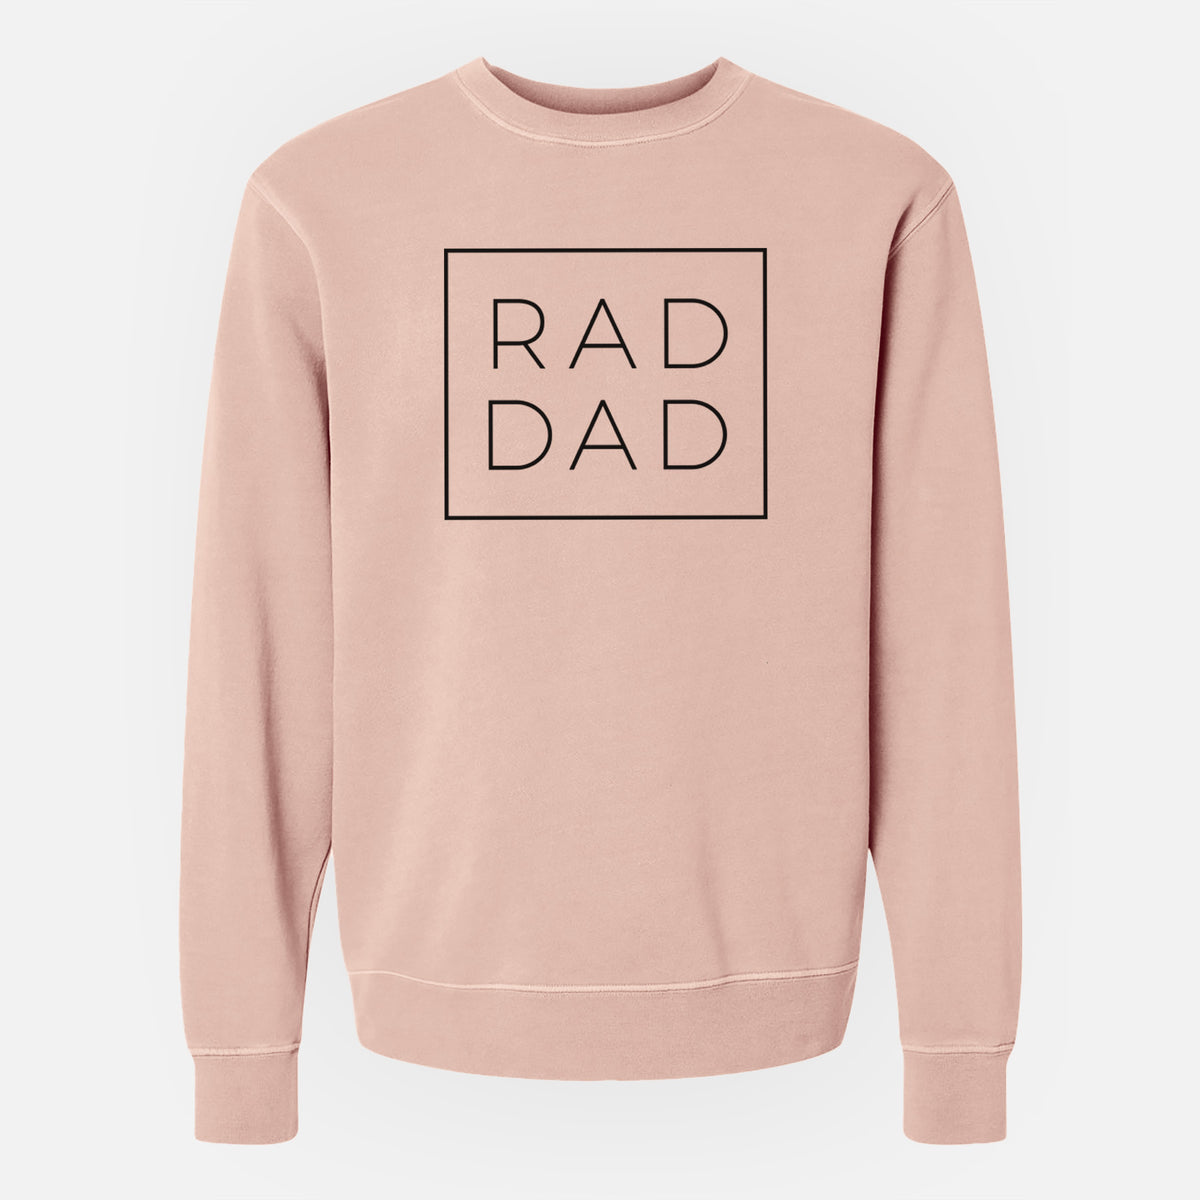 Rad Dad Boxed - Unisex Pigment Dyed Crew Sweatshirt